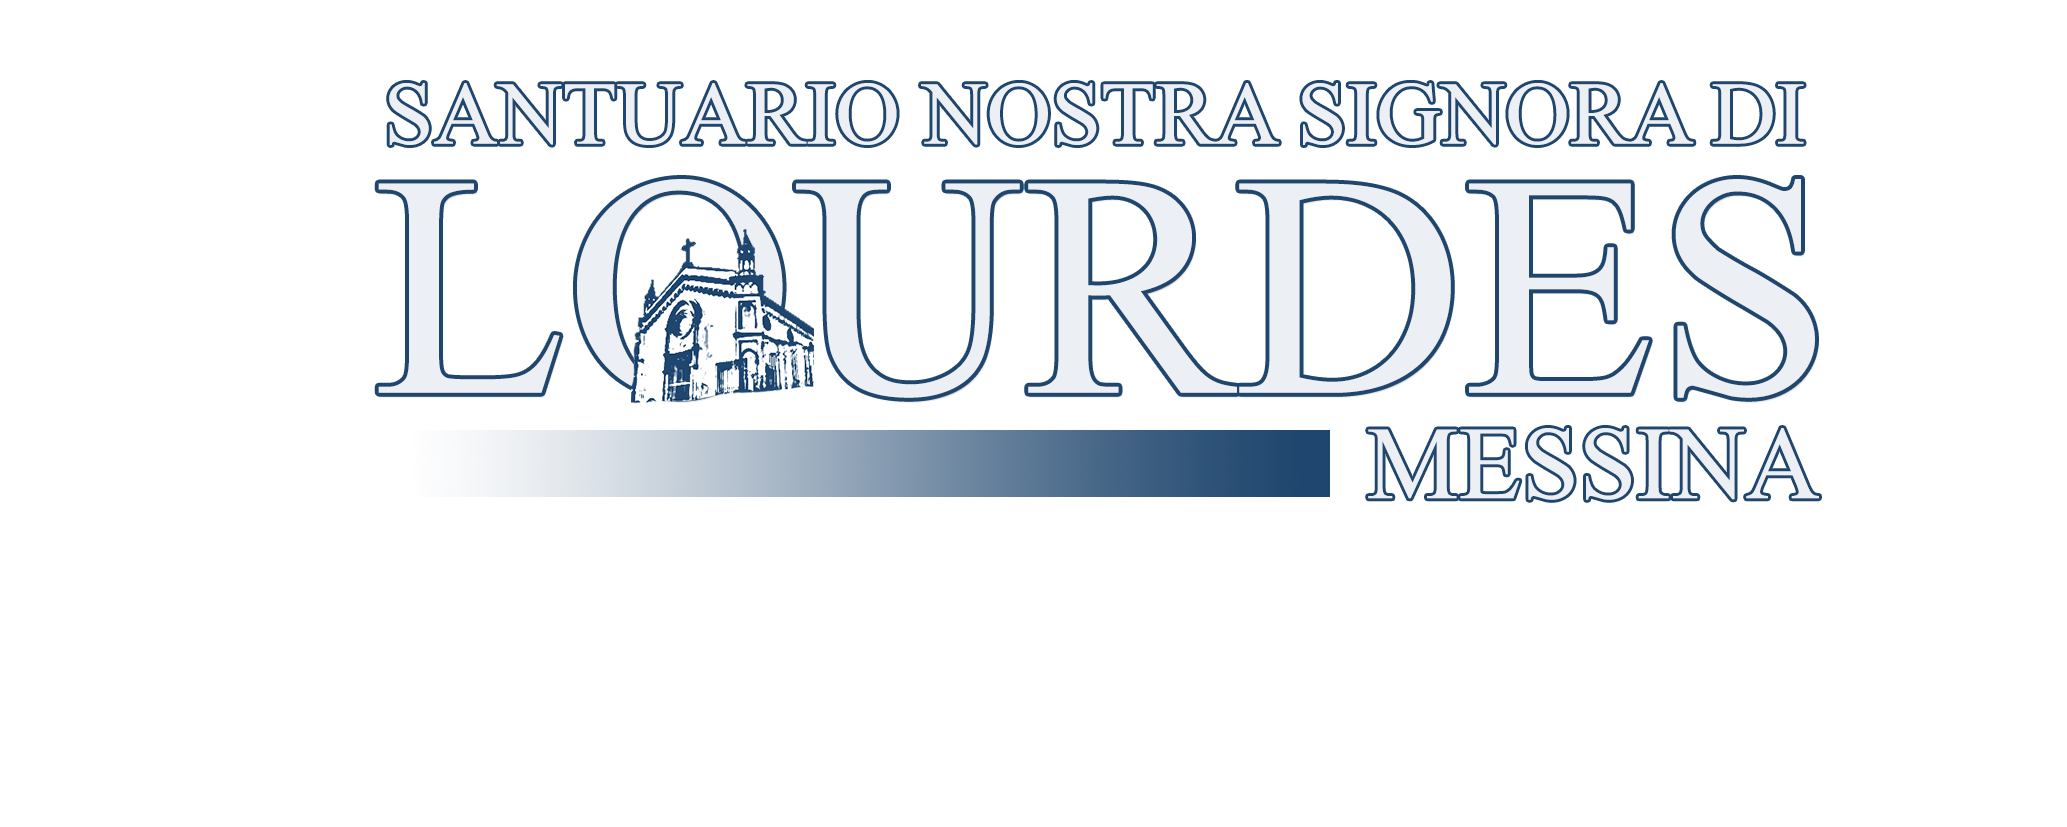 Santuario Nostra Signora di Lourdes - Messina